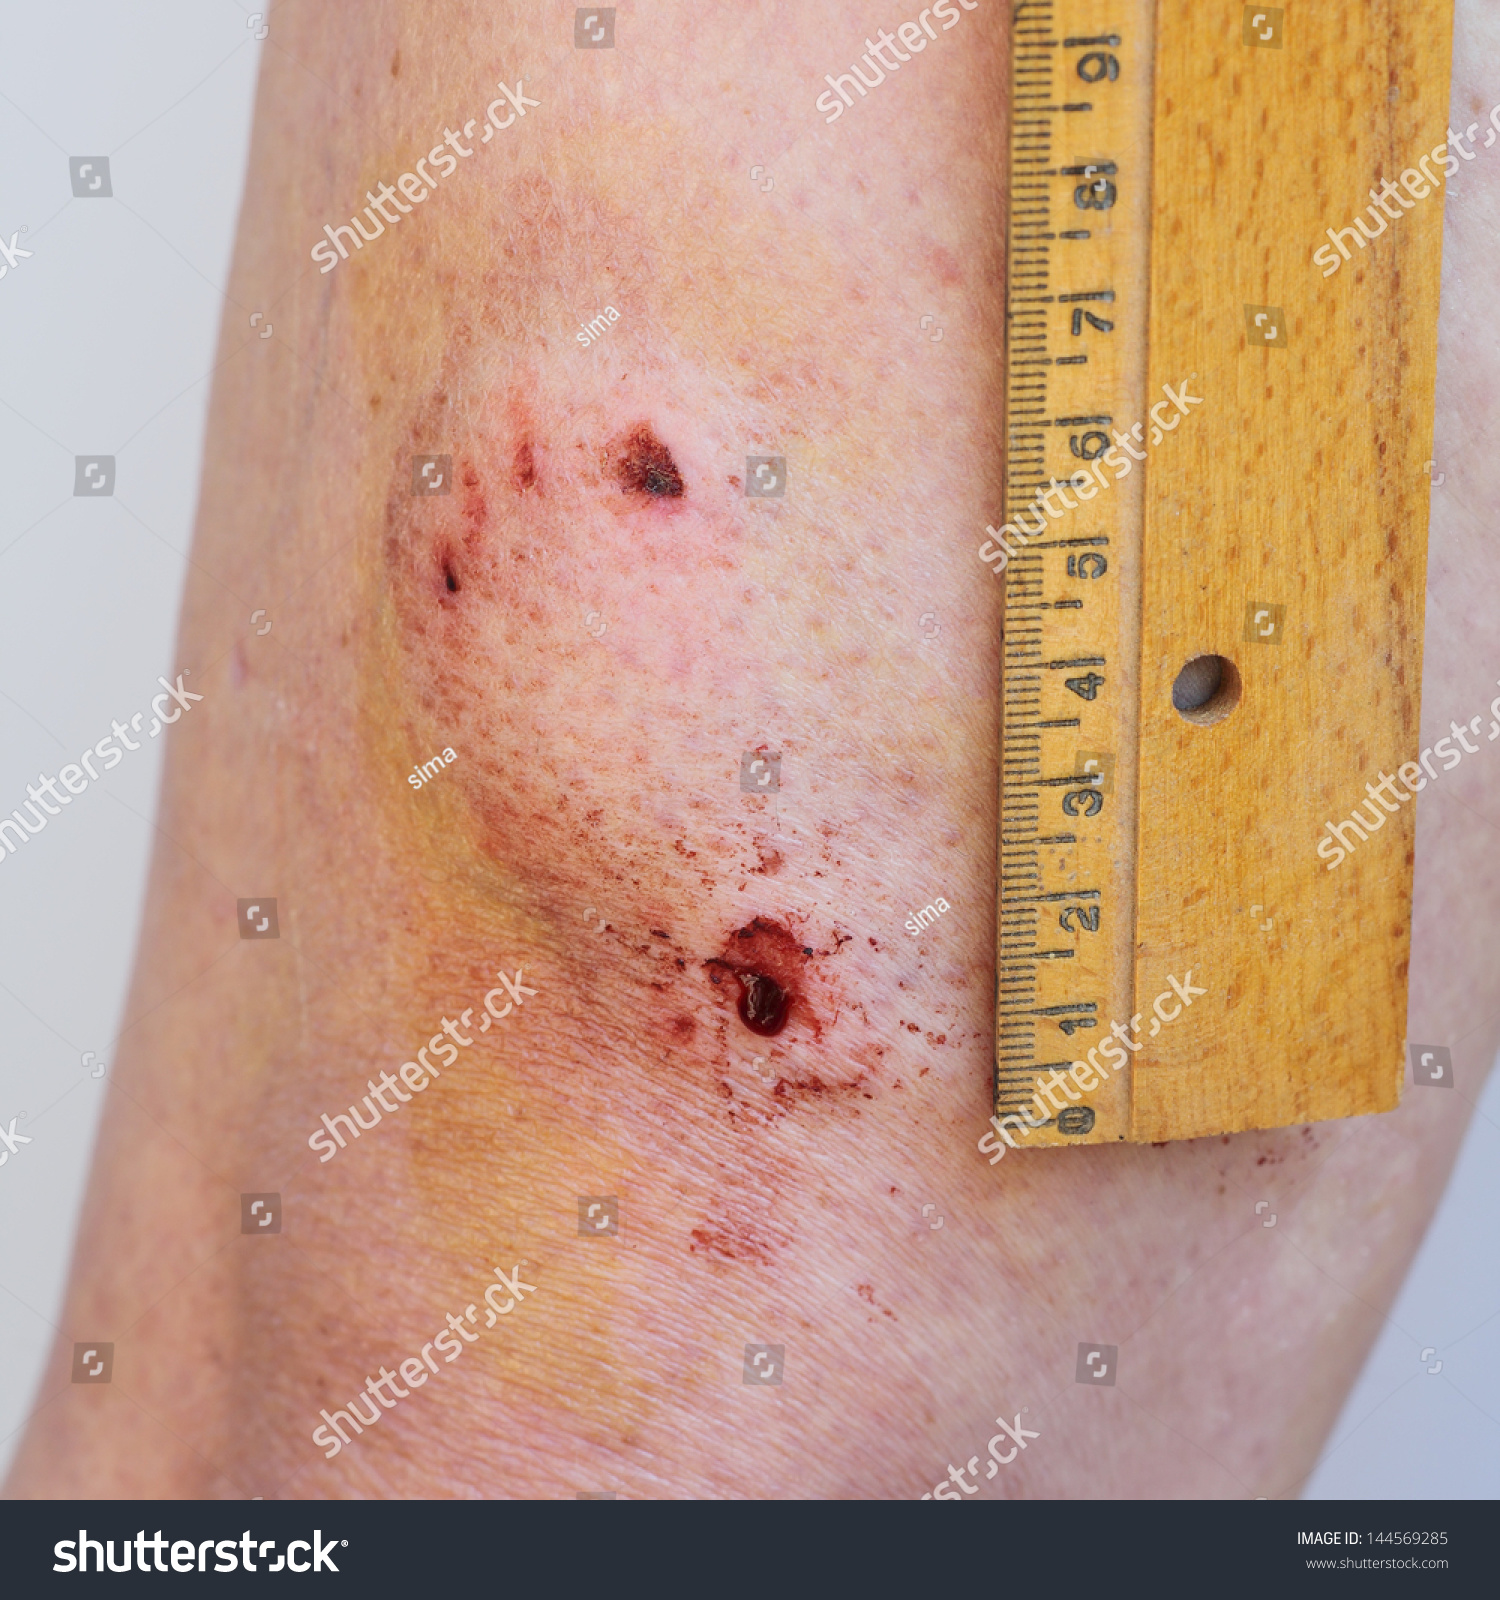 Dog Bite Puncture Wound On Human Leg Stock Photo 144569285 Shutterstock